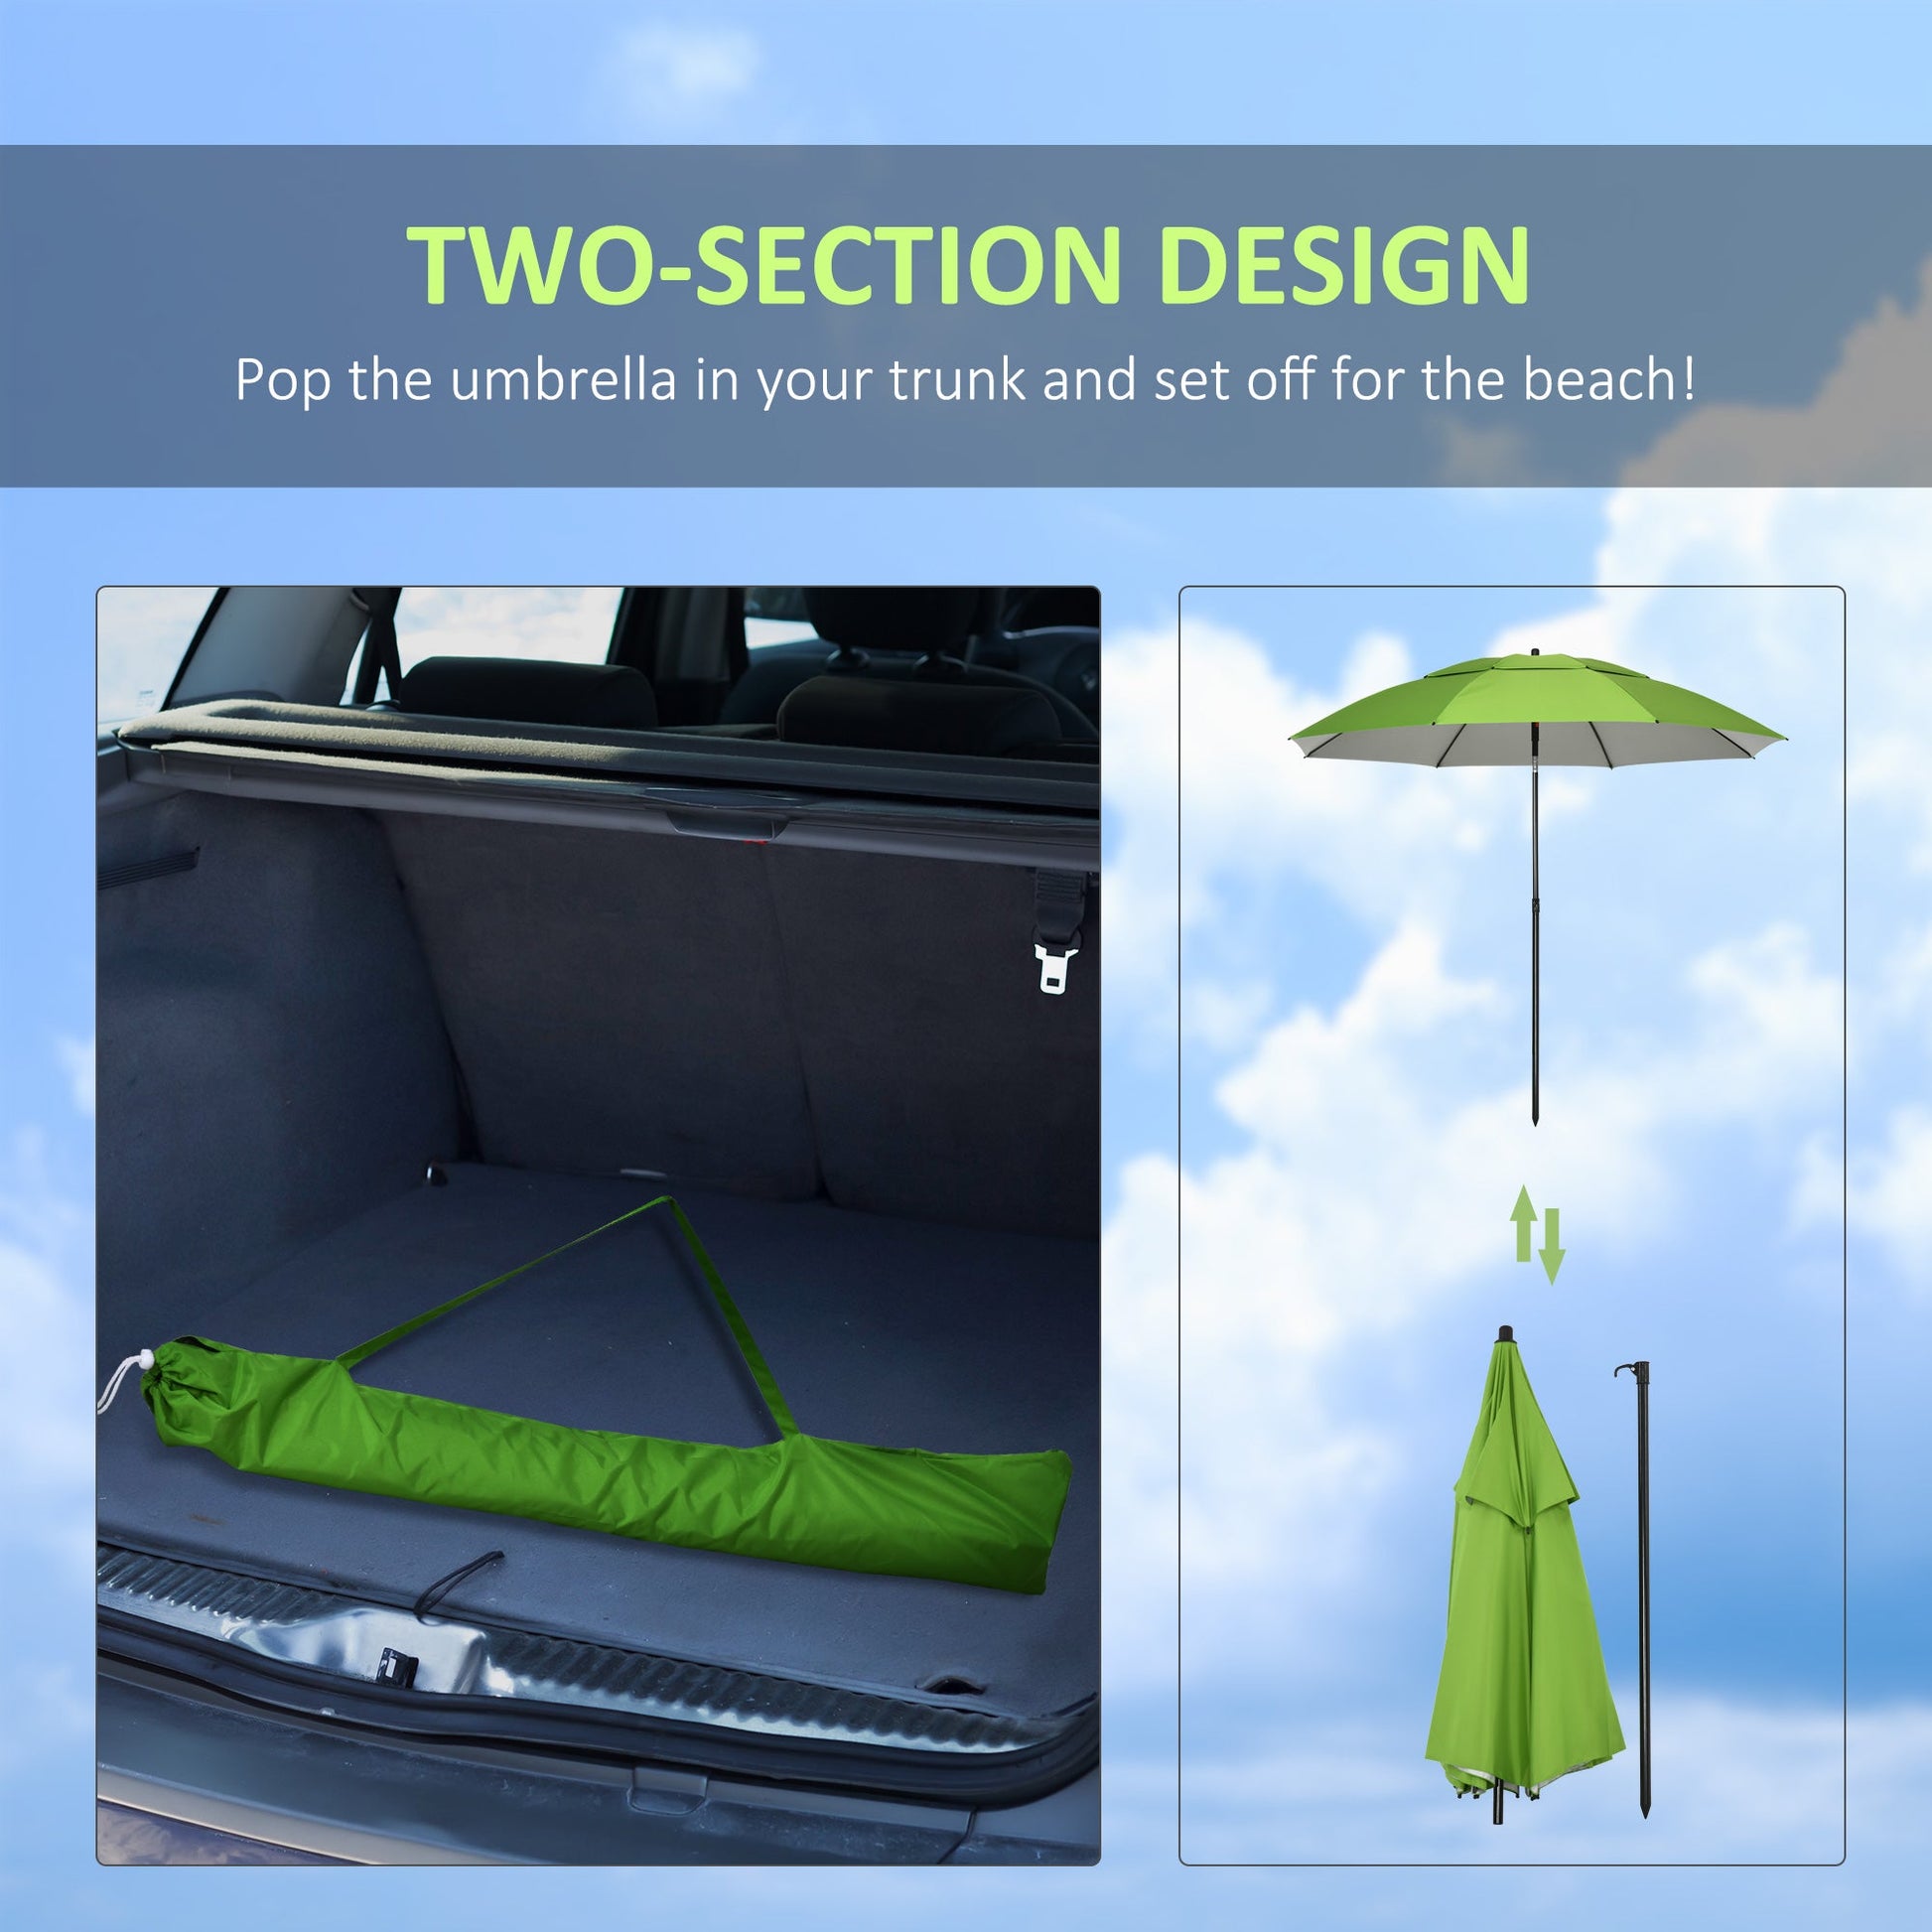 6.6ft Arced Beach Umbrella Angle Adjustable Patio Umbrella w/ Steel Frame, Carry Bag, UV30+ Outdoor Umbrella, Green at Gallery Canada